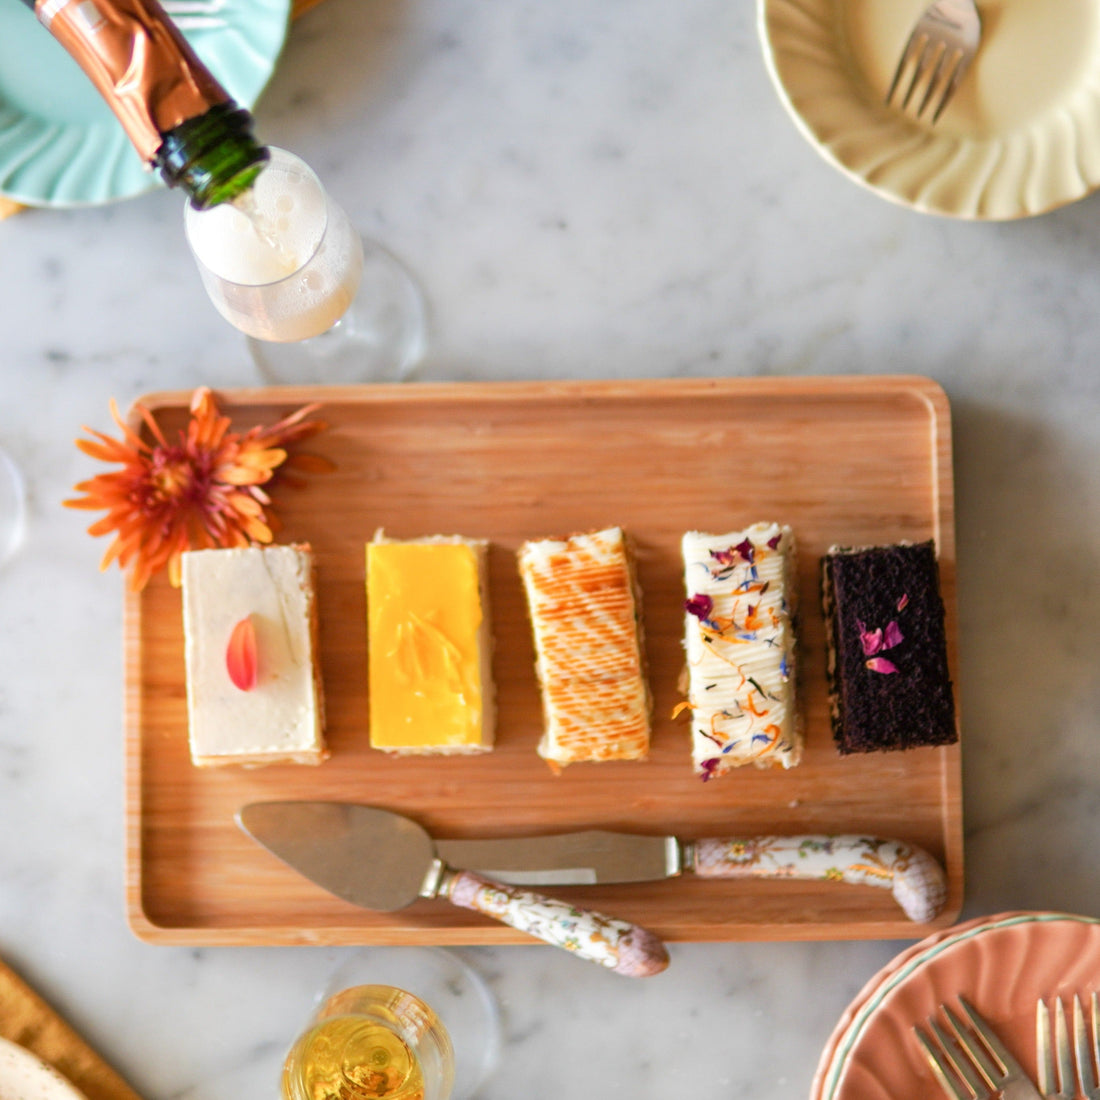 Five slices of rectangular cake arranged on a wooden platter.